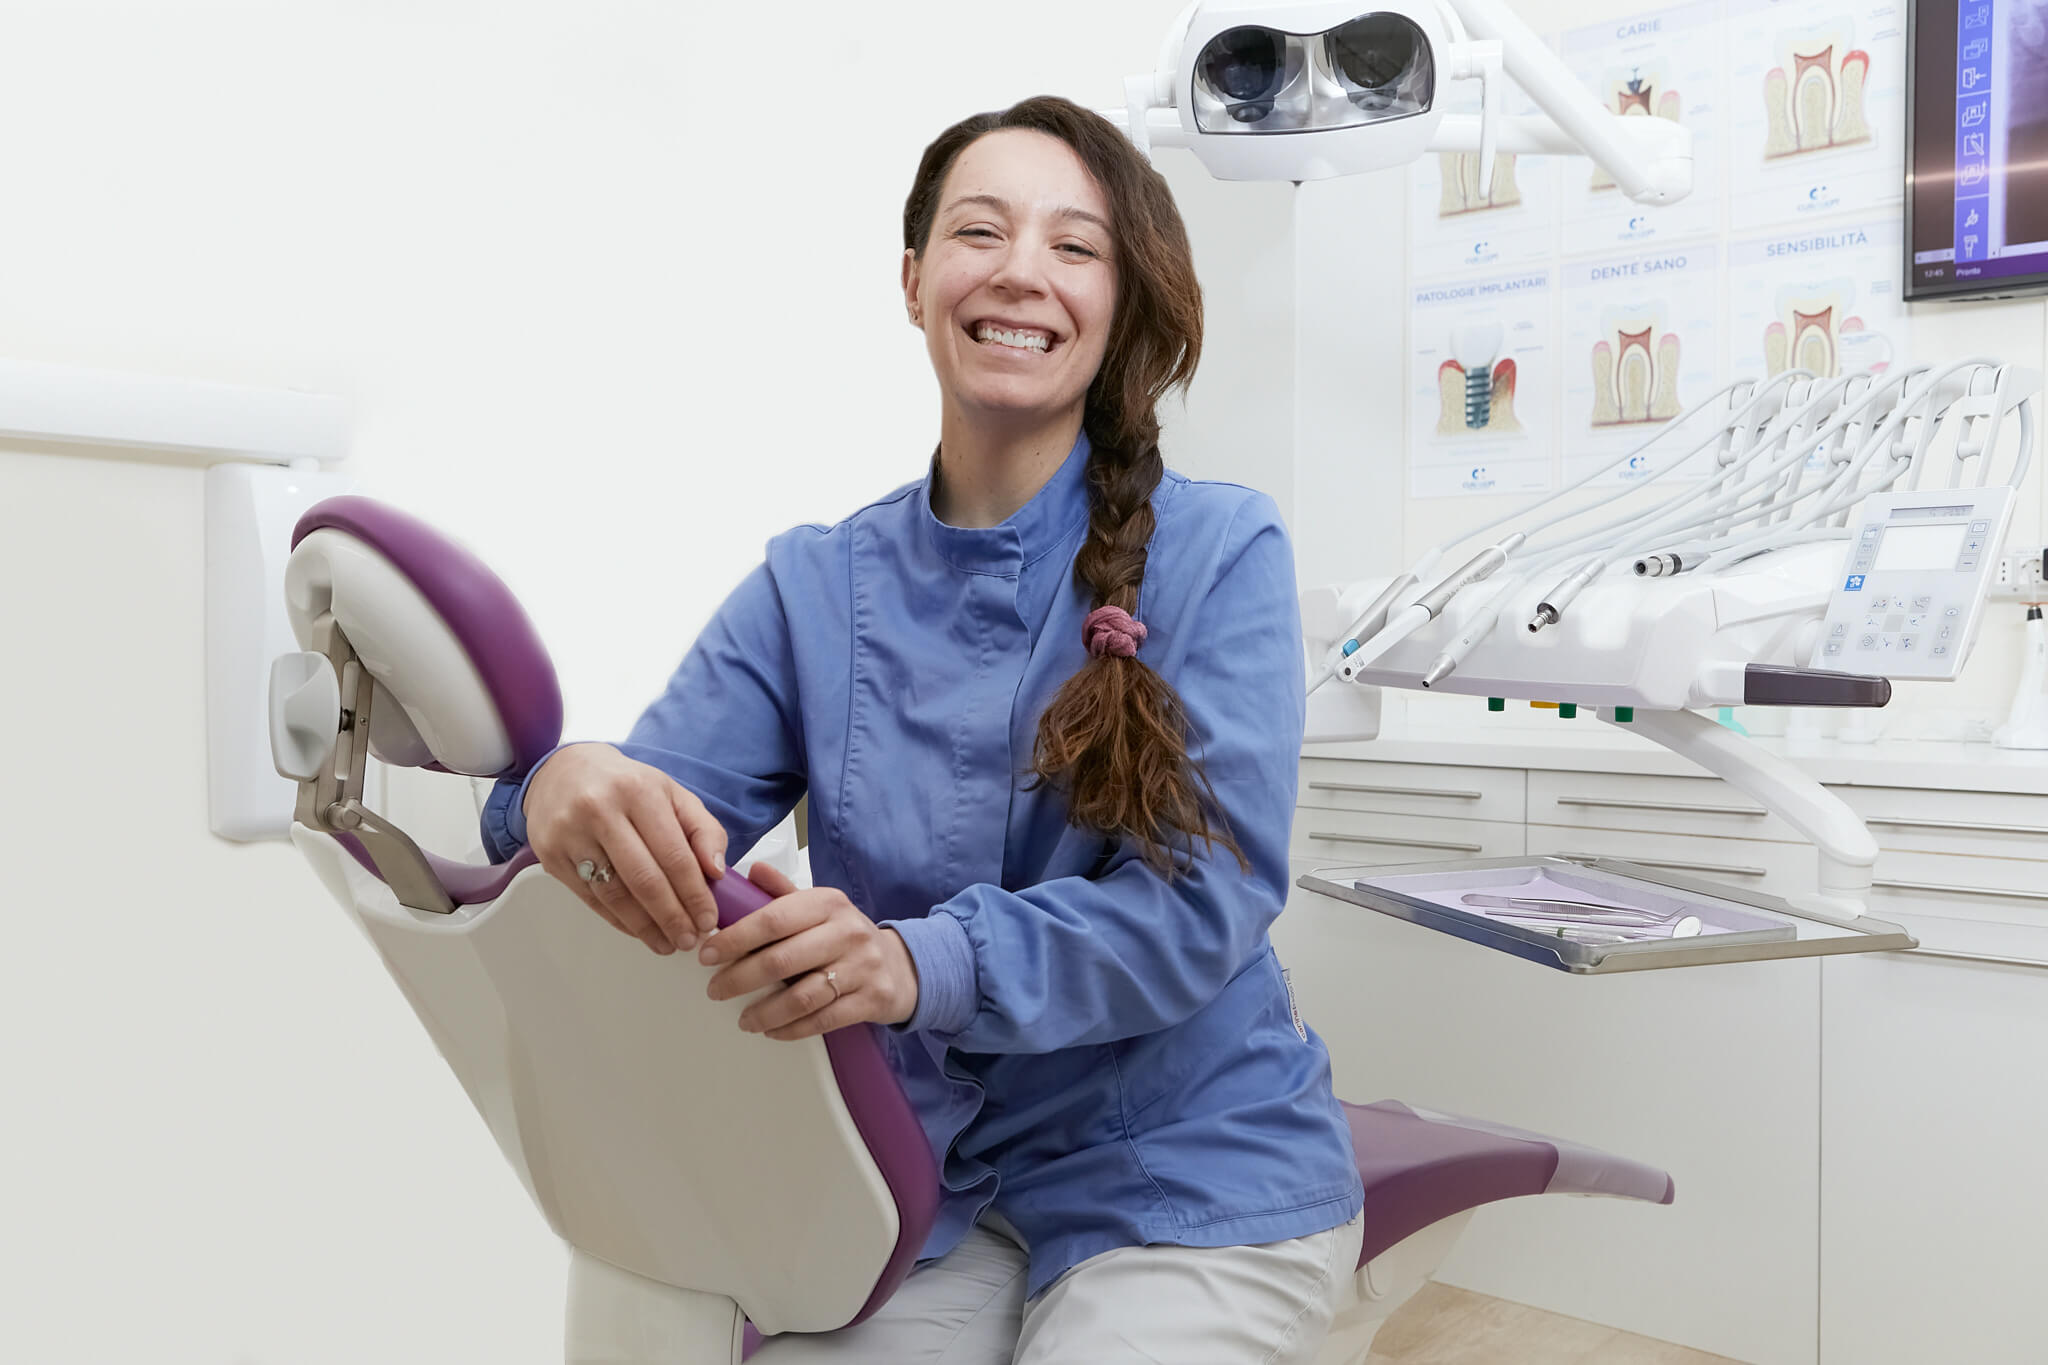 Studio dentistico tg dental roma dentista finocchio borghesiana dott.ssa Aurora Michelli igiene dentale